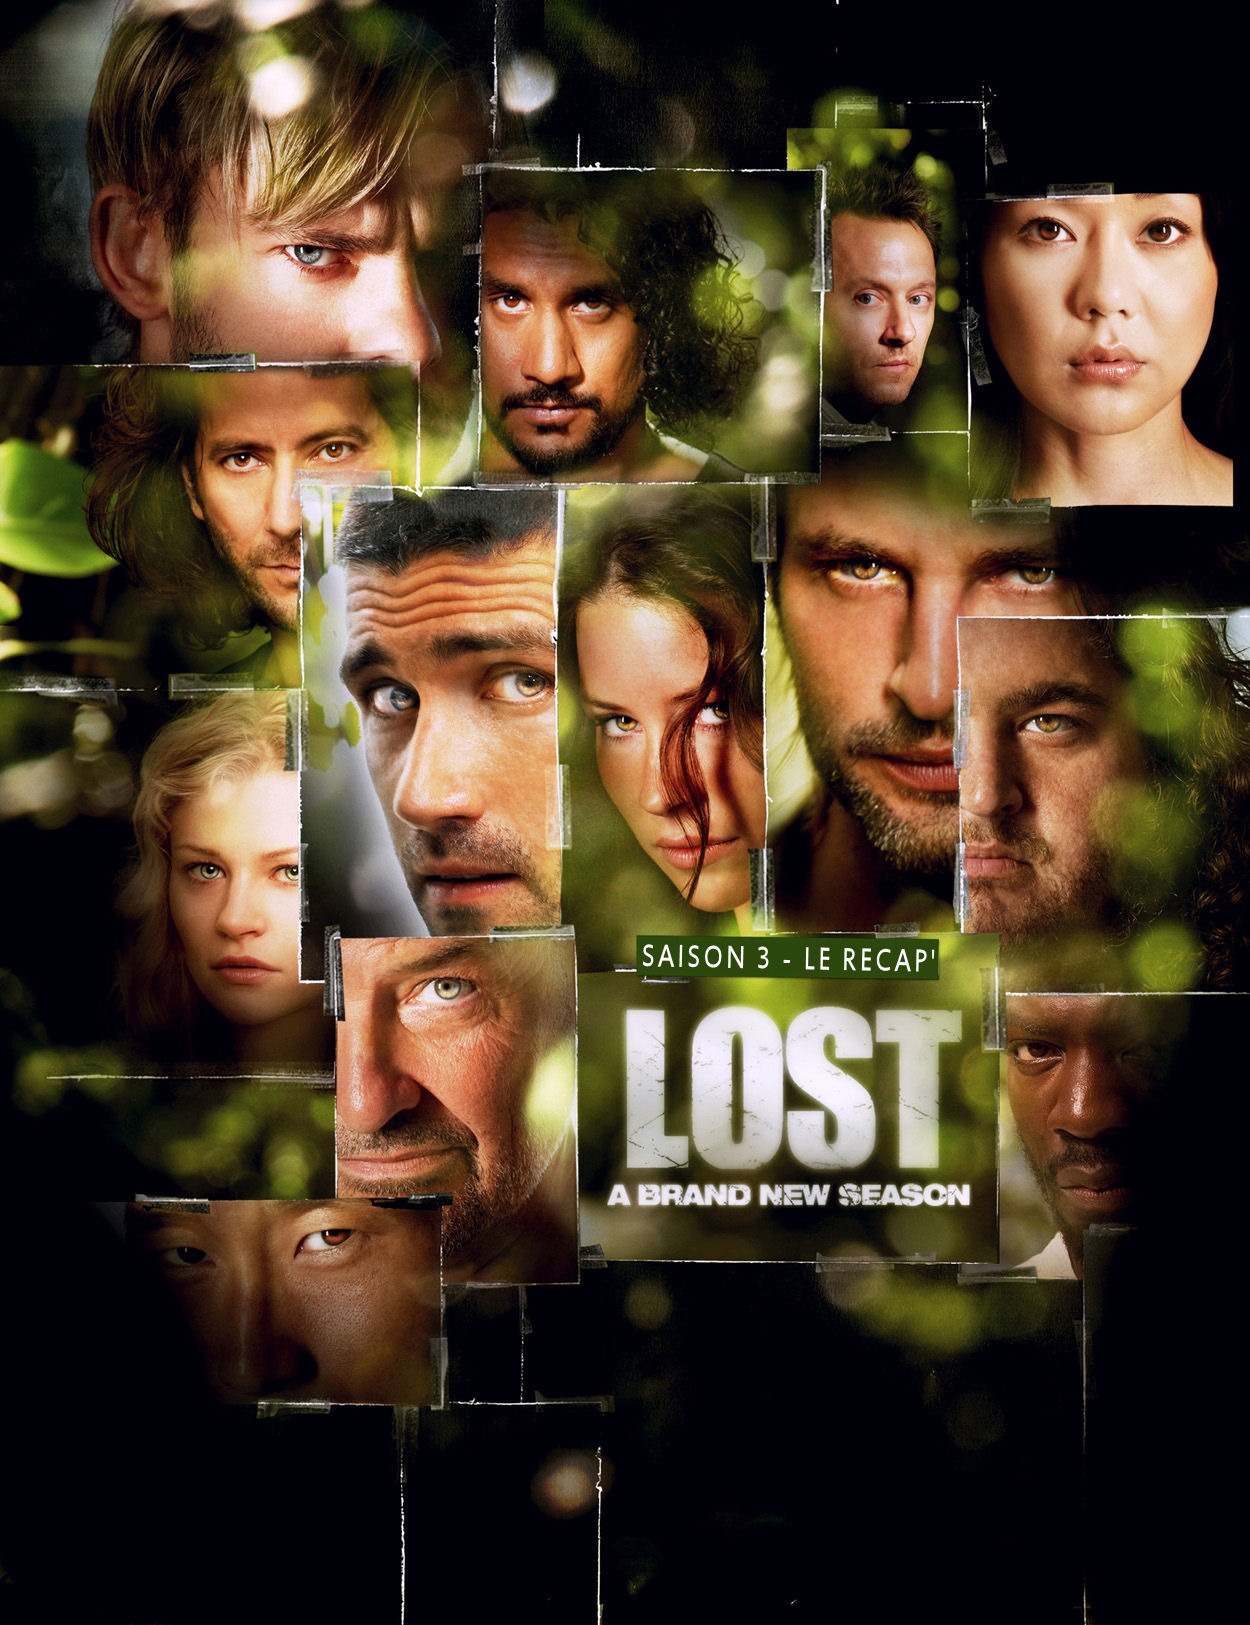 Reviews - LOST - saison 3 lostseason3